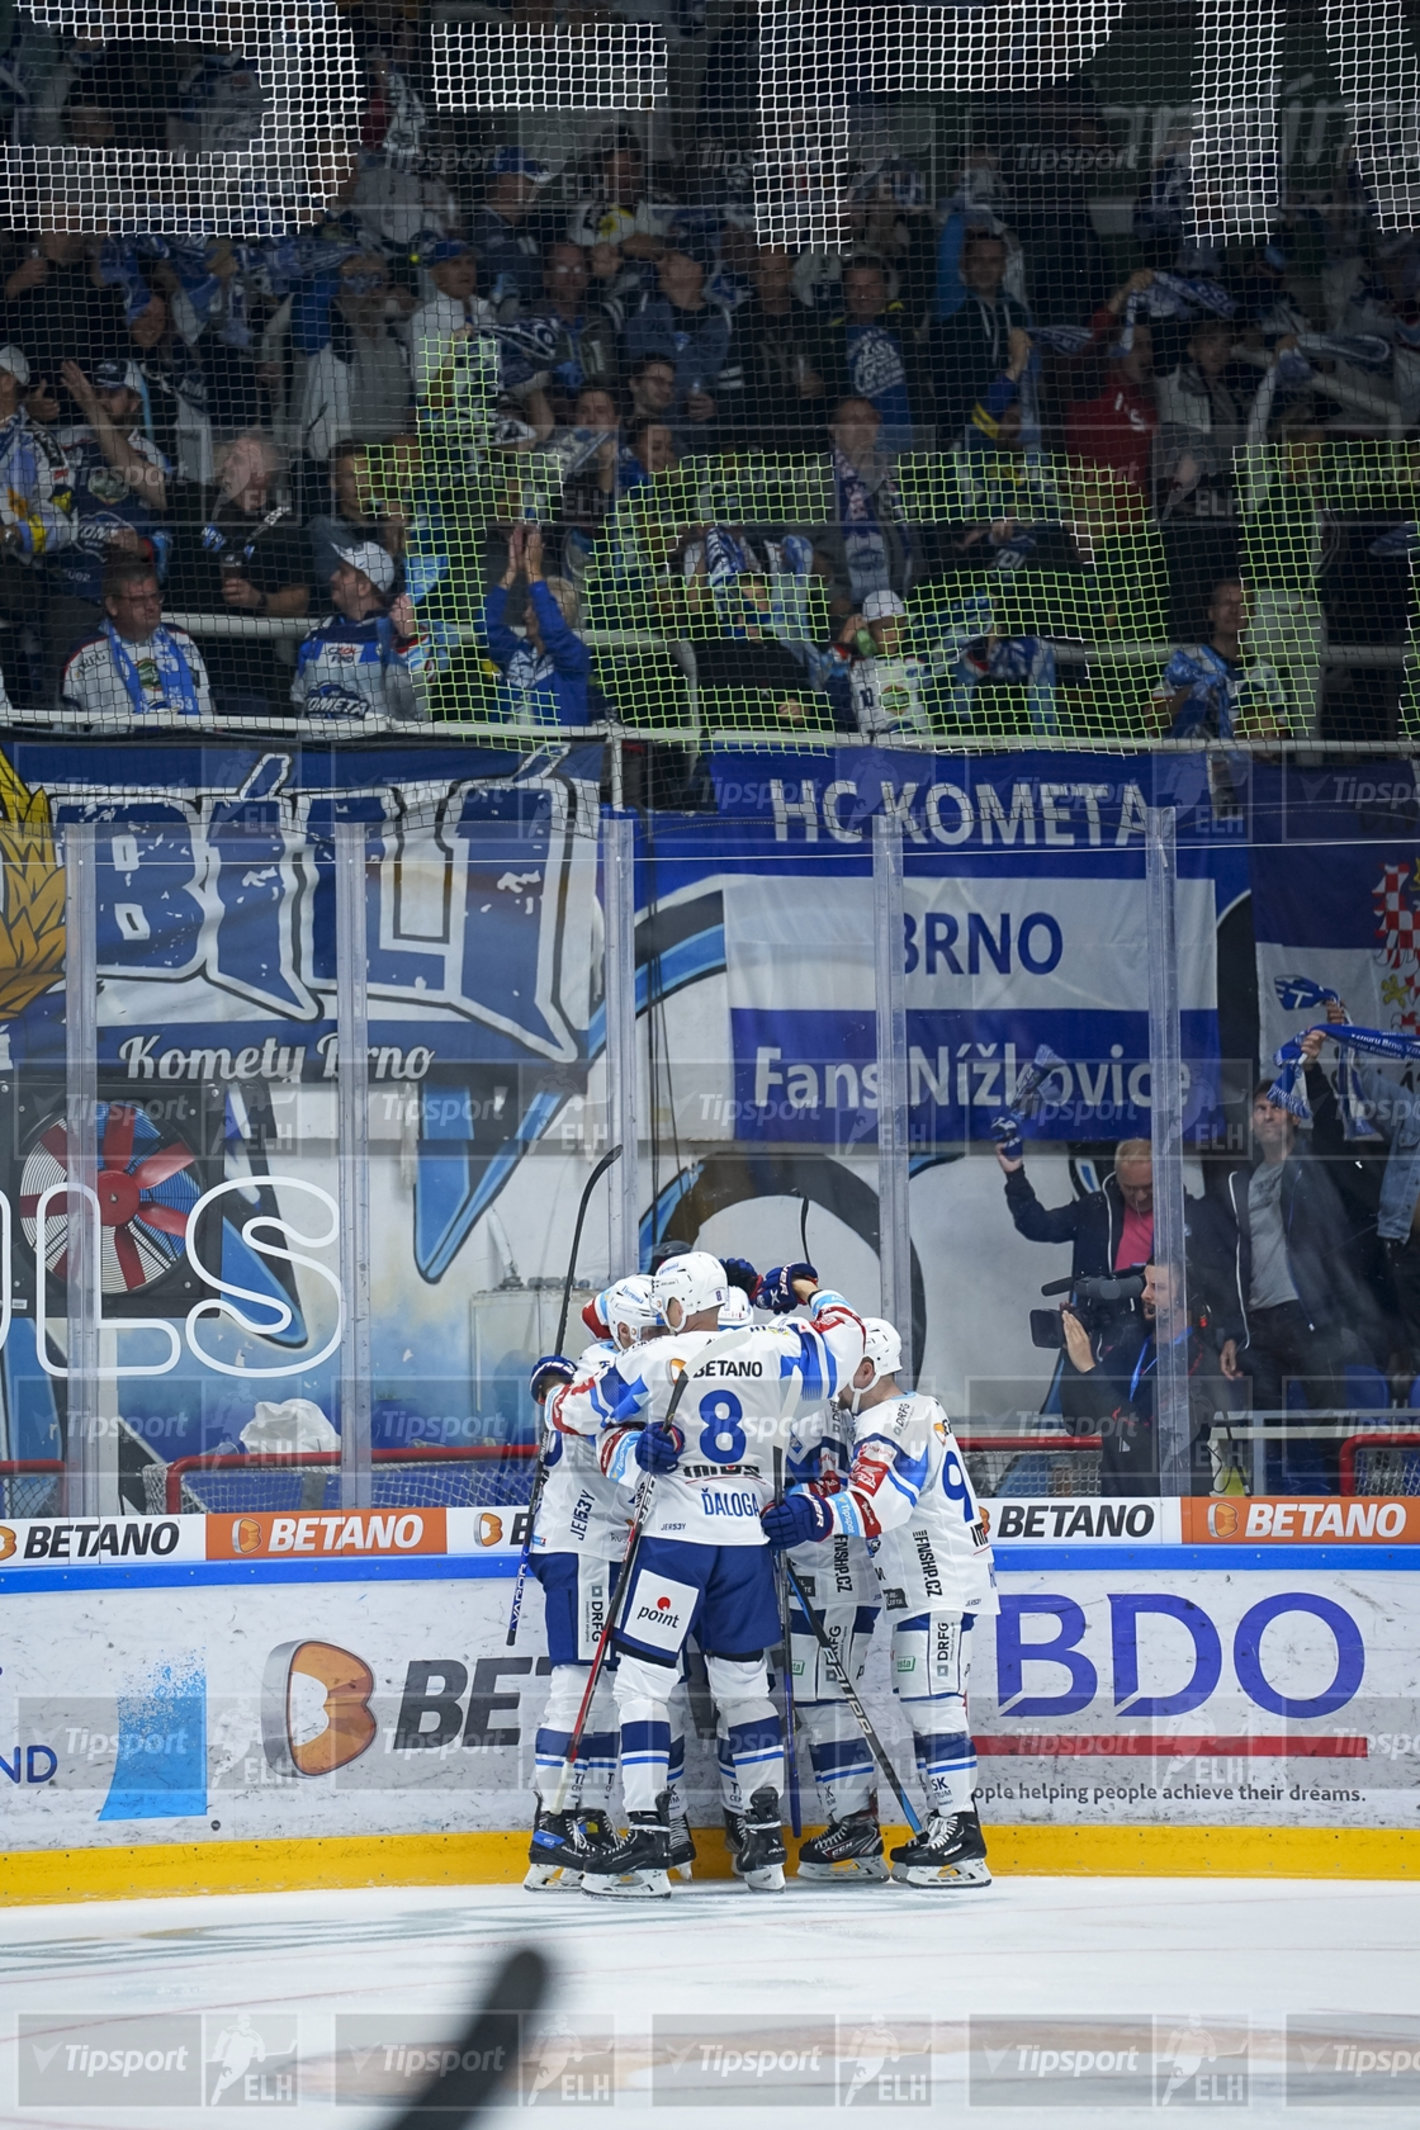 Foto: Vladimír Čižmár/HC Kometa Brno.